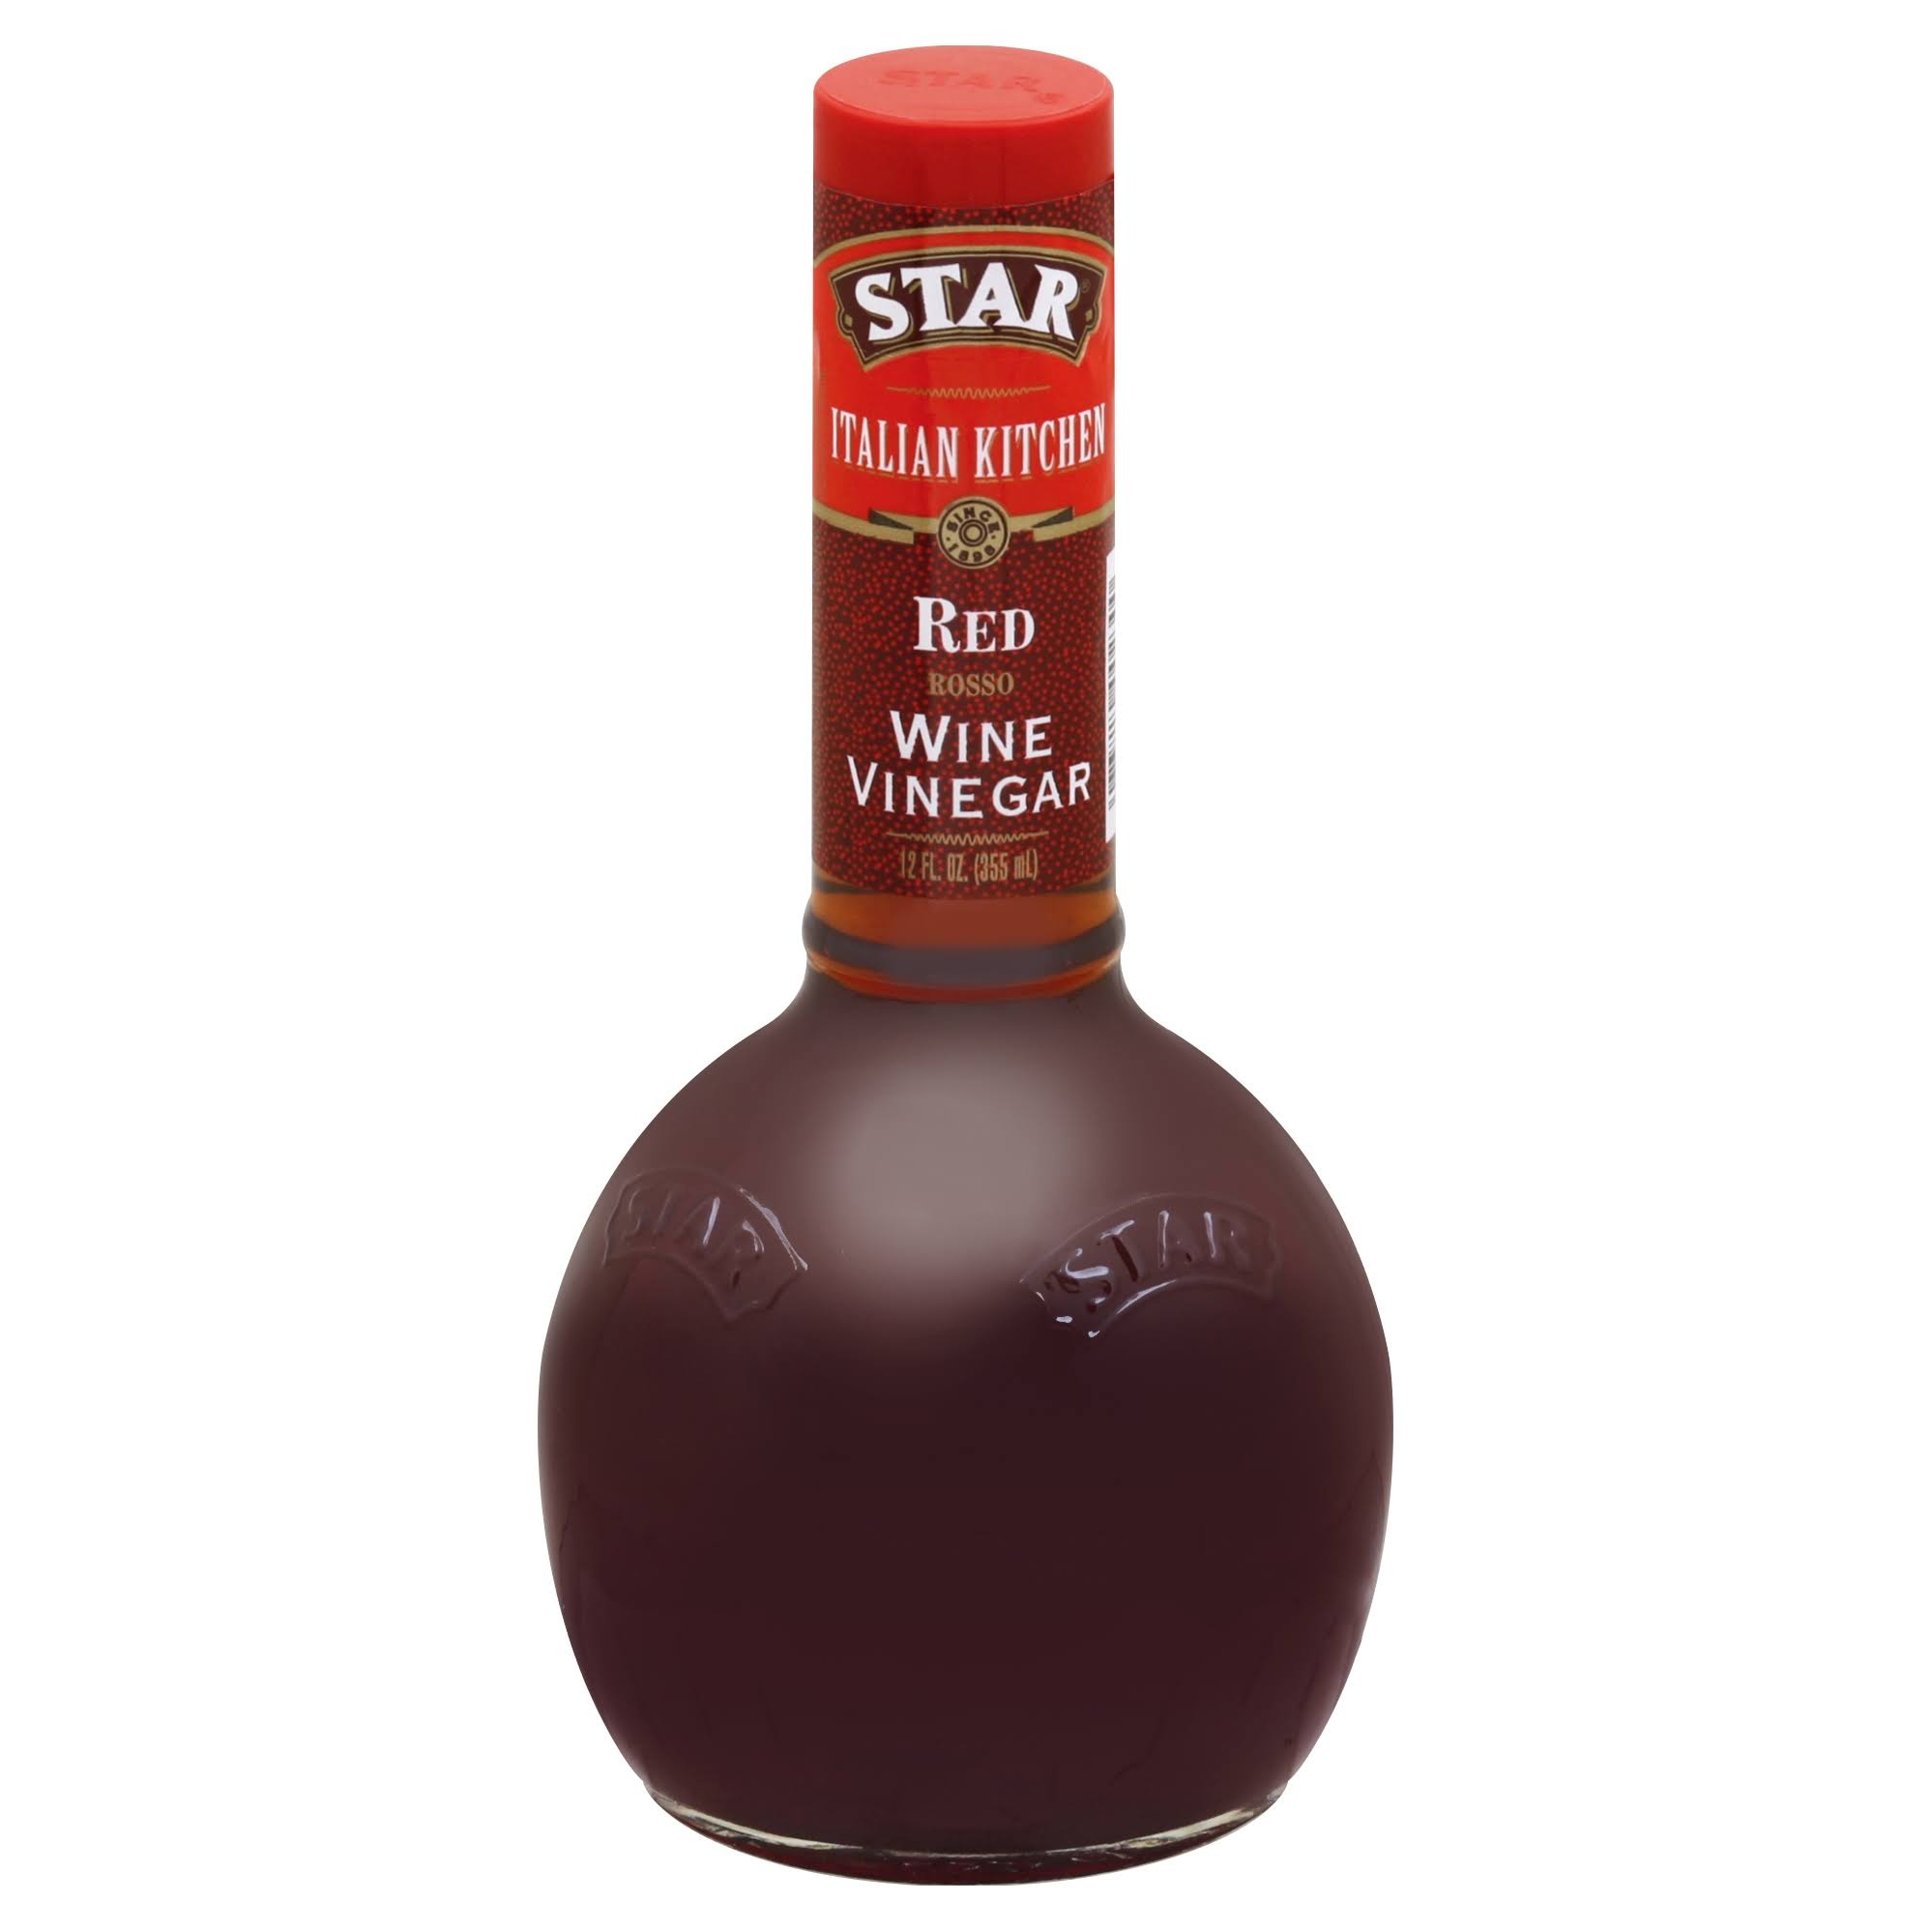 Star Italian Kitchen Red Wine Vinegar - 12oz